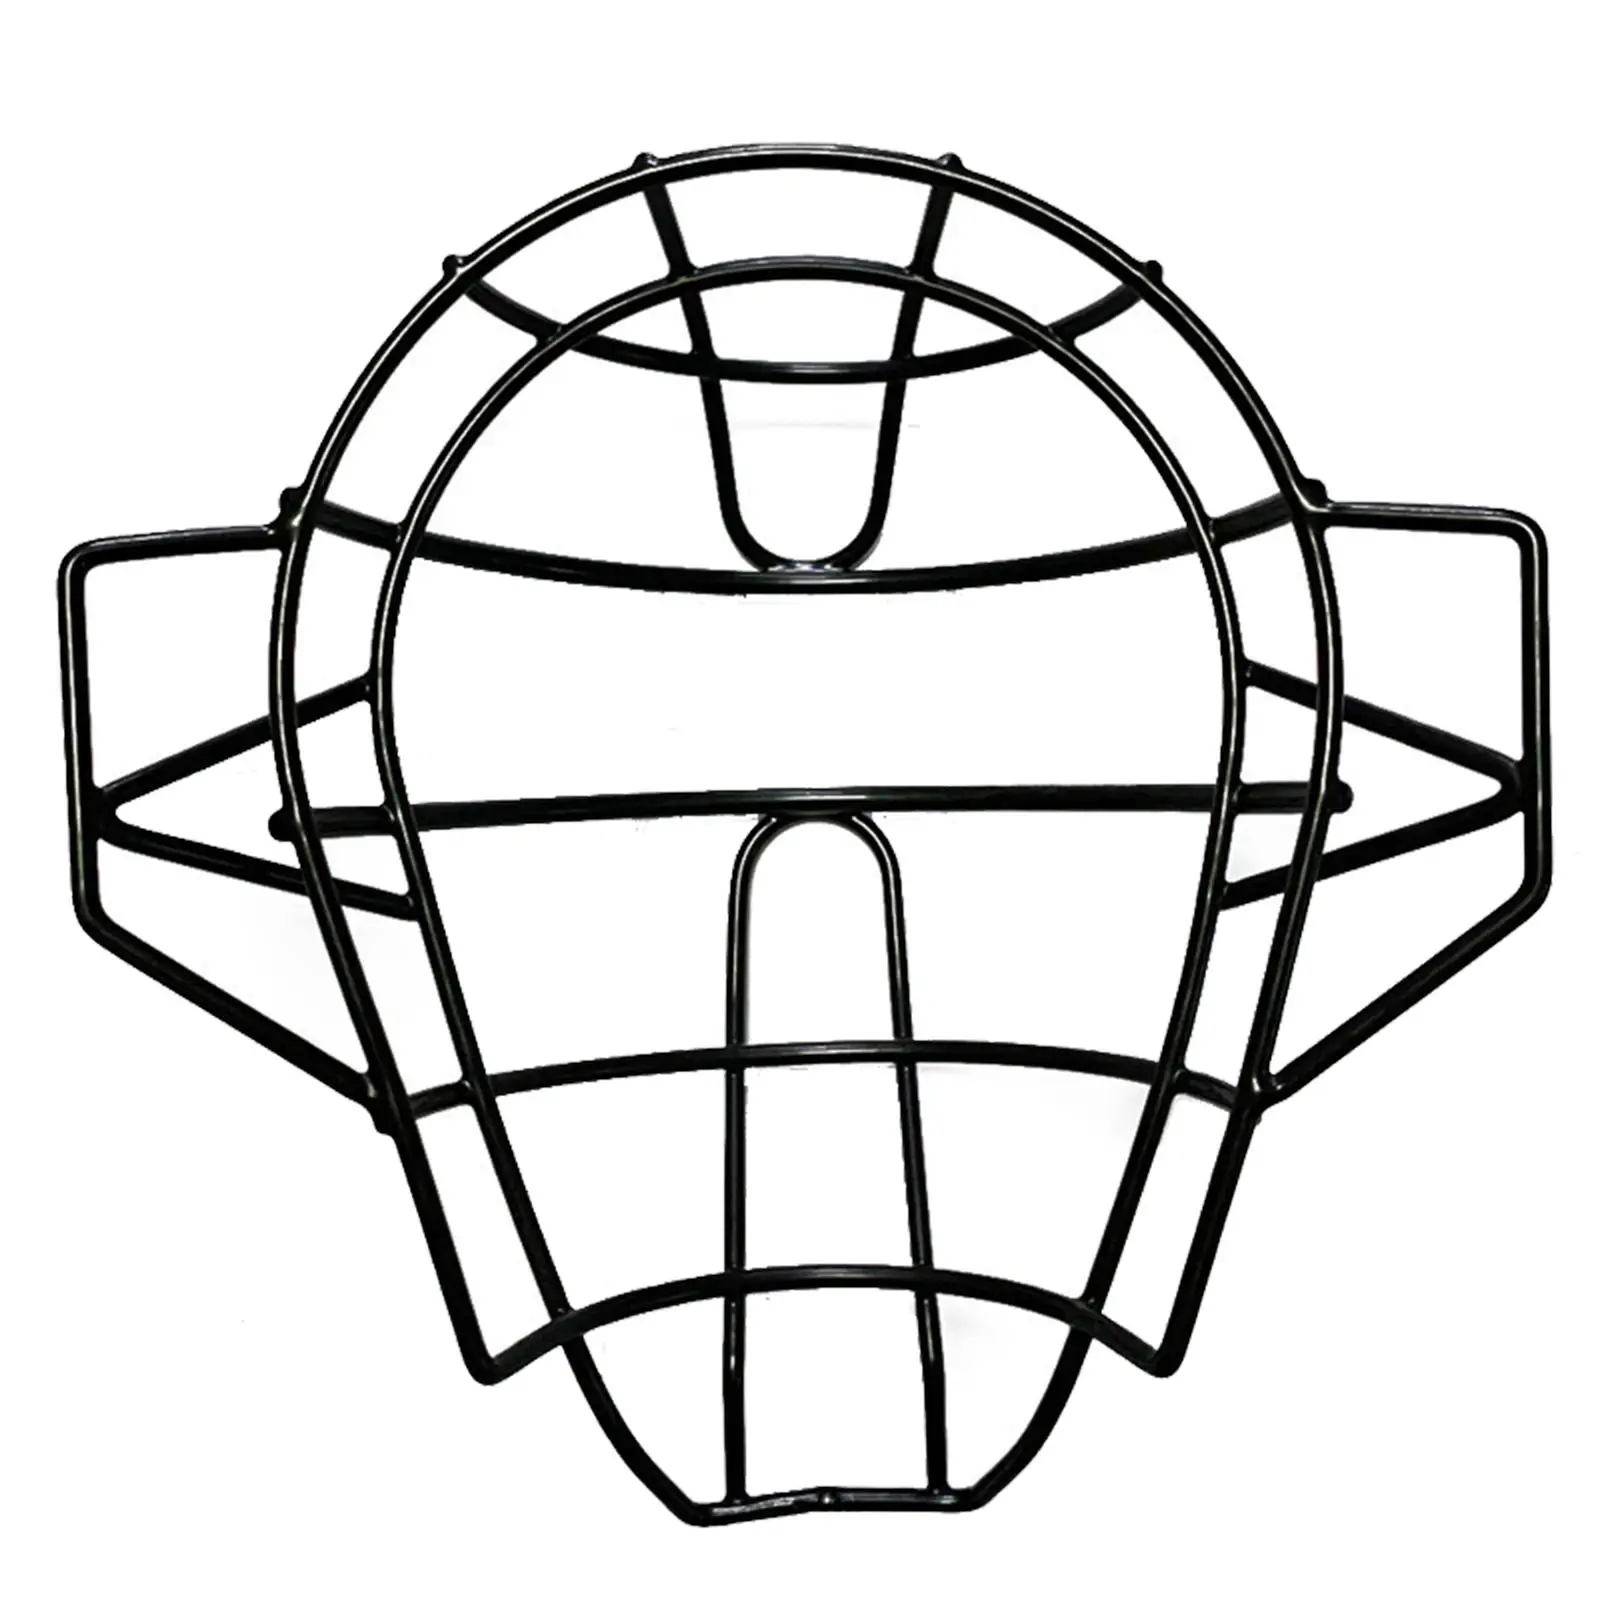 Batting Helmet Face Guard Baseball Softball Protective Mask Women Men